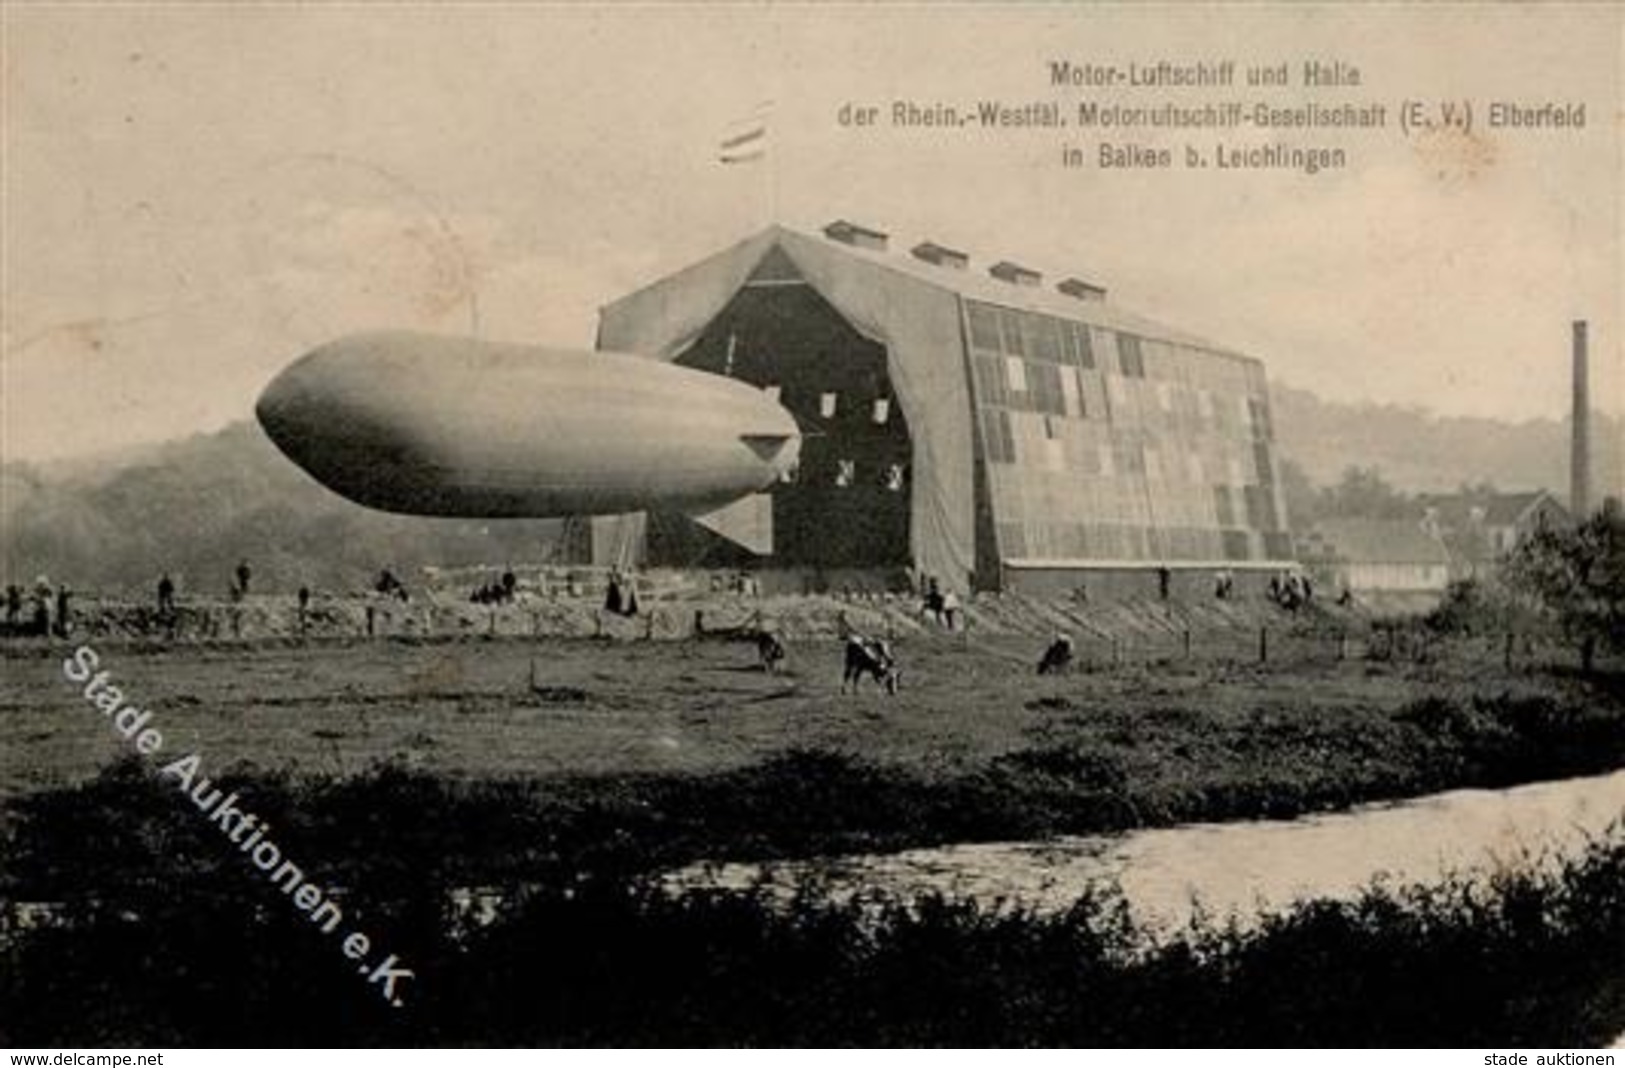 Zeppelin Leichlingen (5653) Motor Luftschiff Und Halle Elberfeld In Balken 1912 I-II Dirigeable - Aeronaves